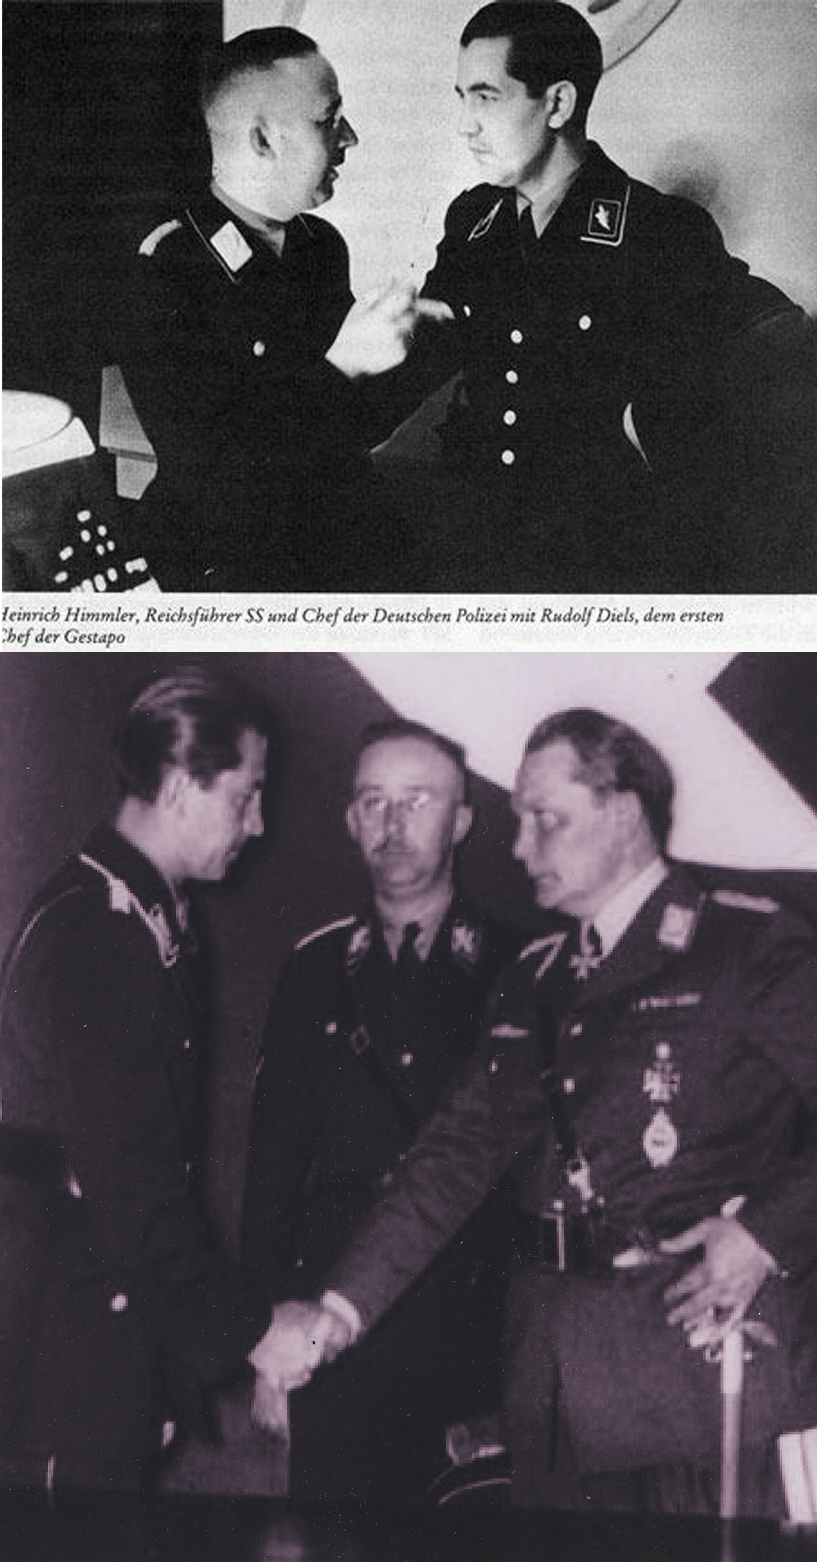 SS Sword of SS-Oberführer Rudolf Diels’s - Chief of the Gestapo